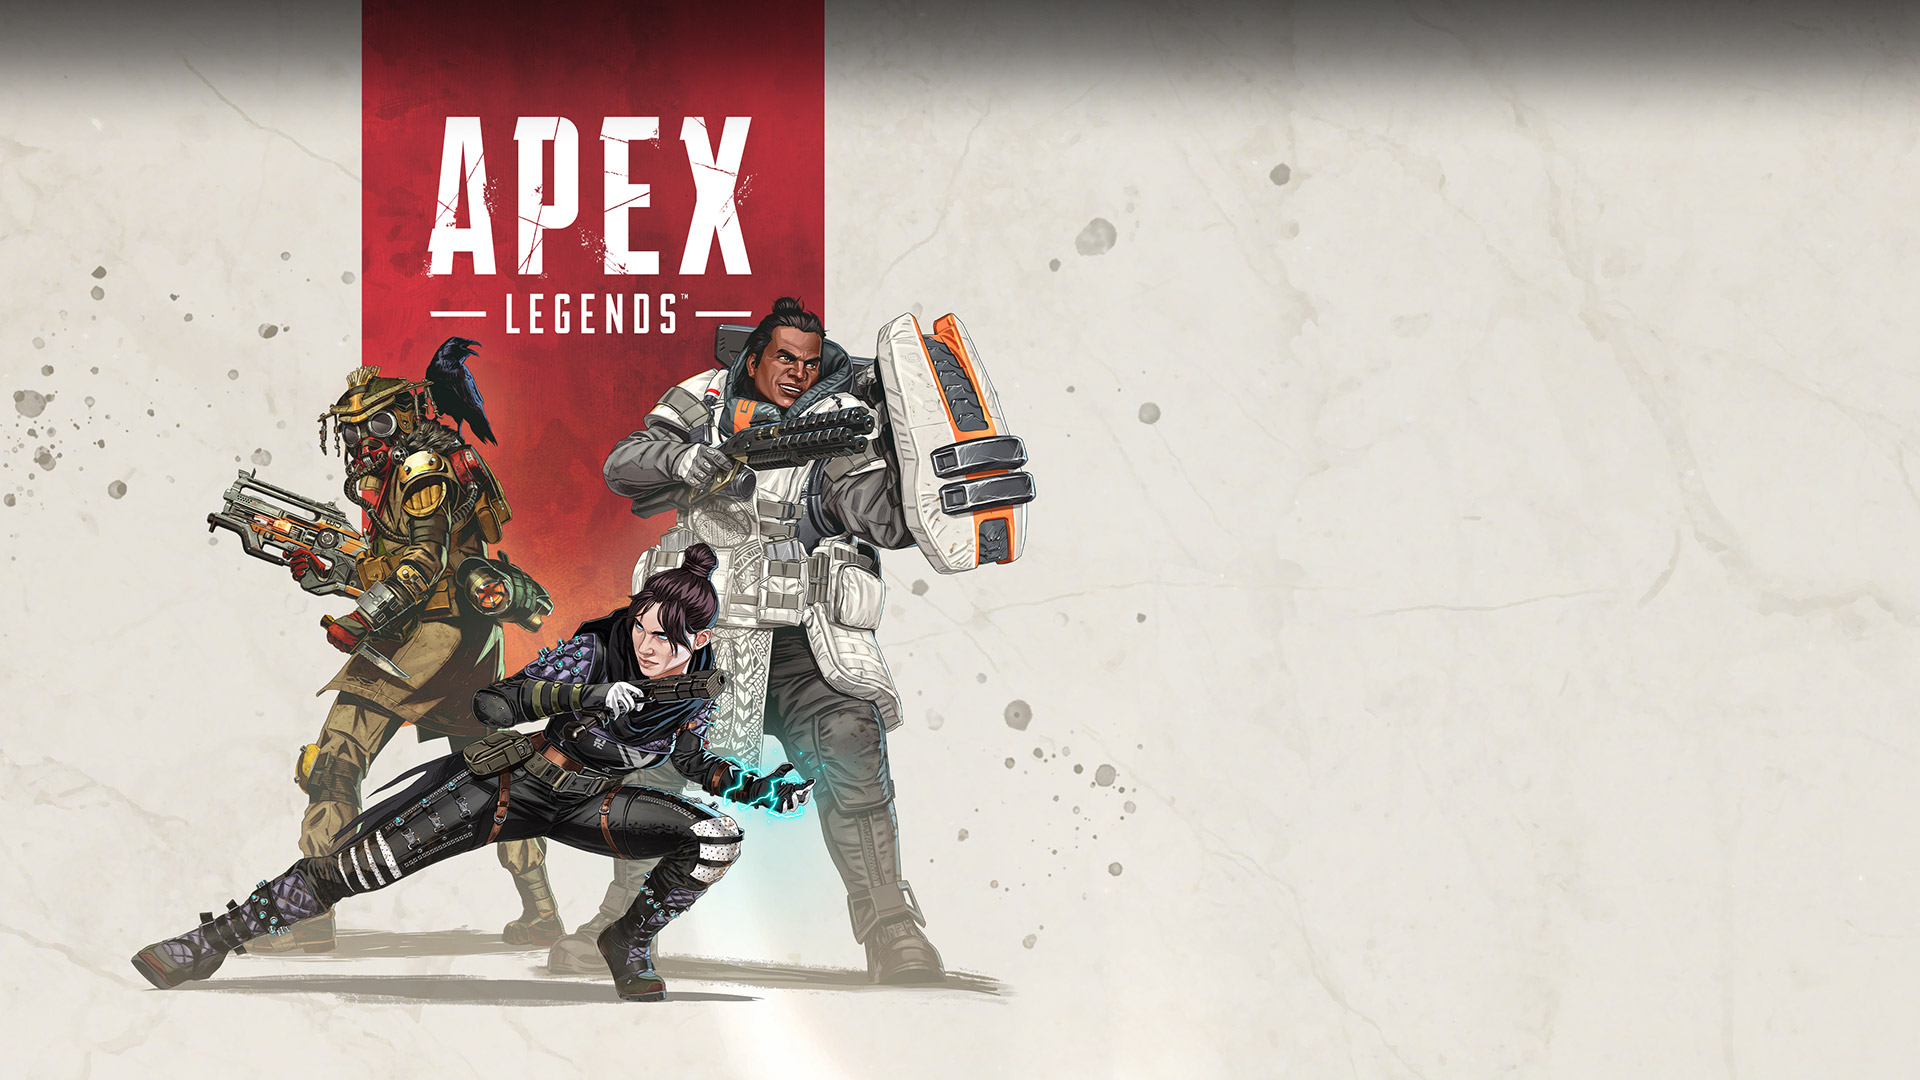 Apex Legends, drie personages in gevechtshouding.